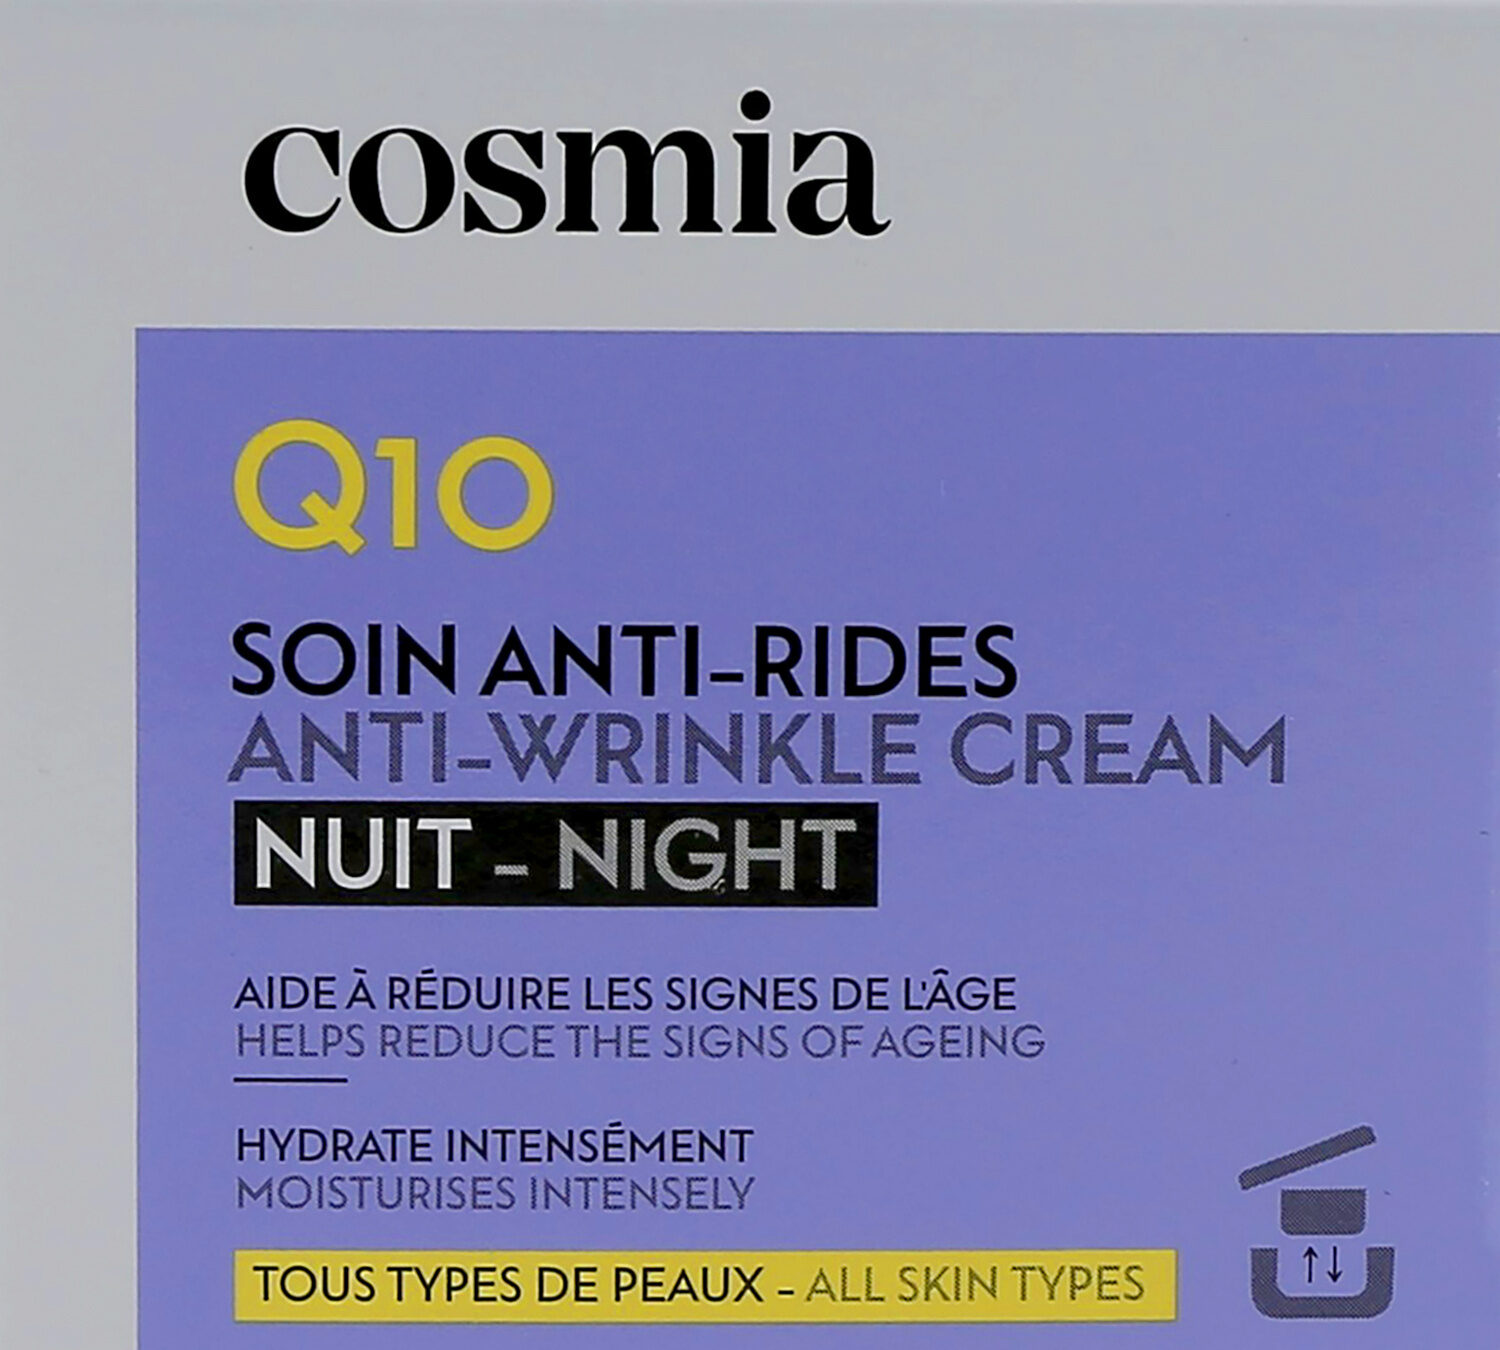 Cosmia creme nuit - anti ride - q10 50ml - نتاج - fr